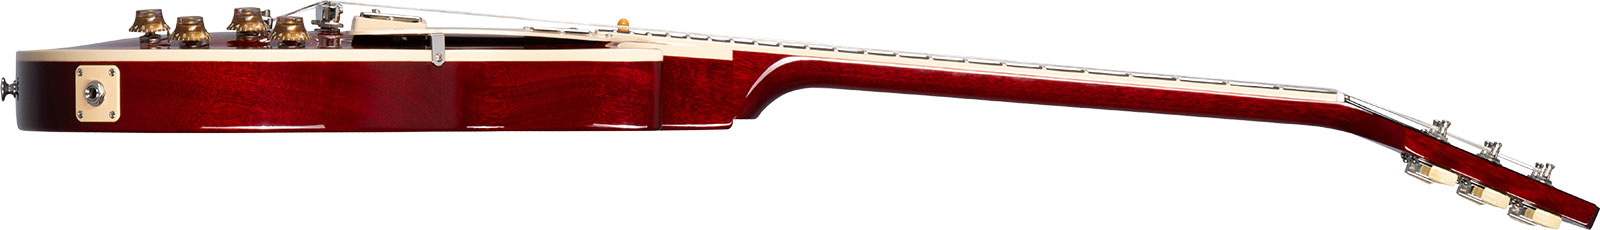 Gibson Les Paul Standard 50s Figured Original 2h Ht Rw - 60s Cherry - Single cut electric guitar - Variation 2